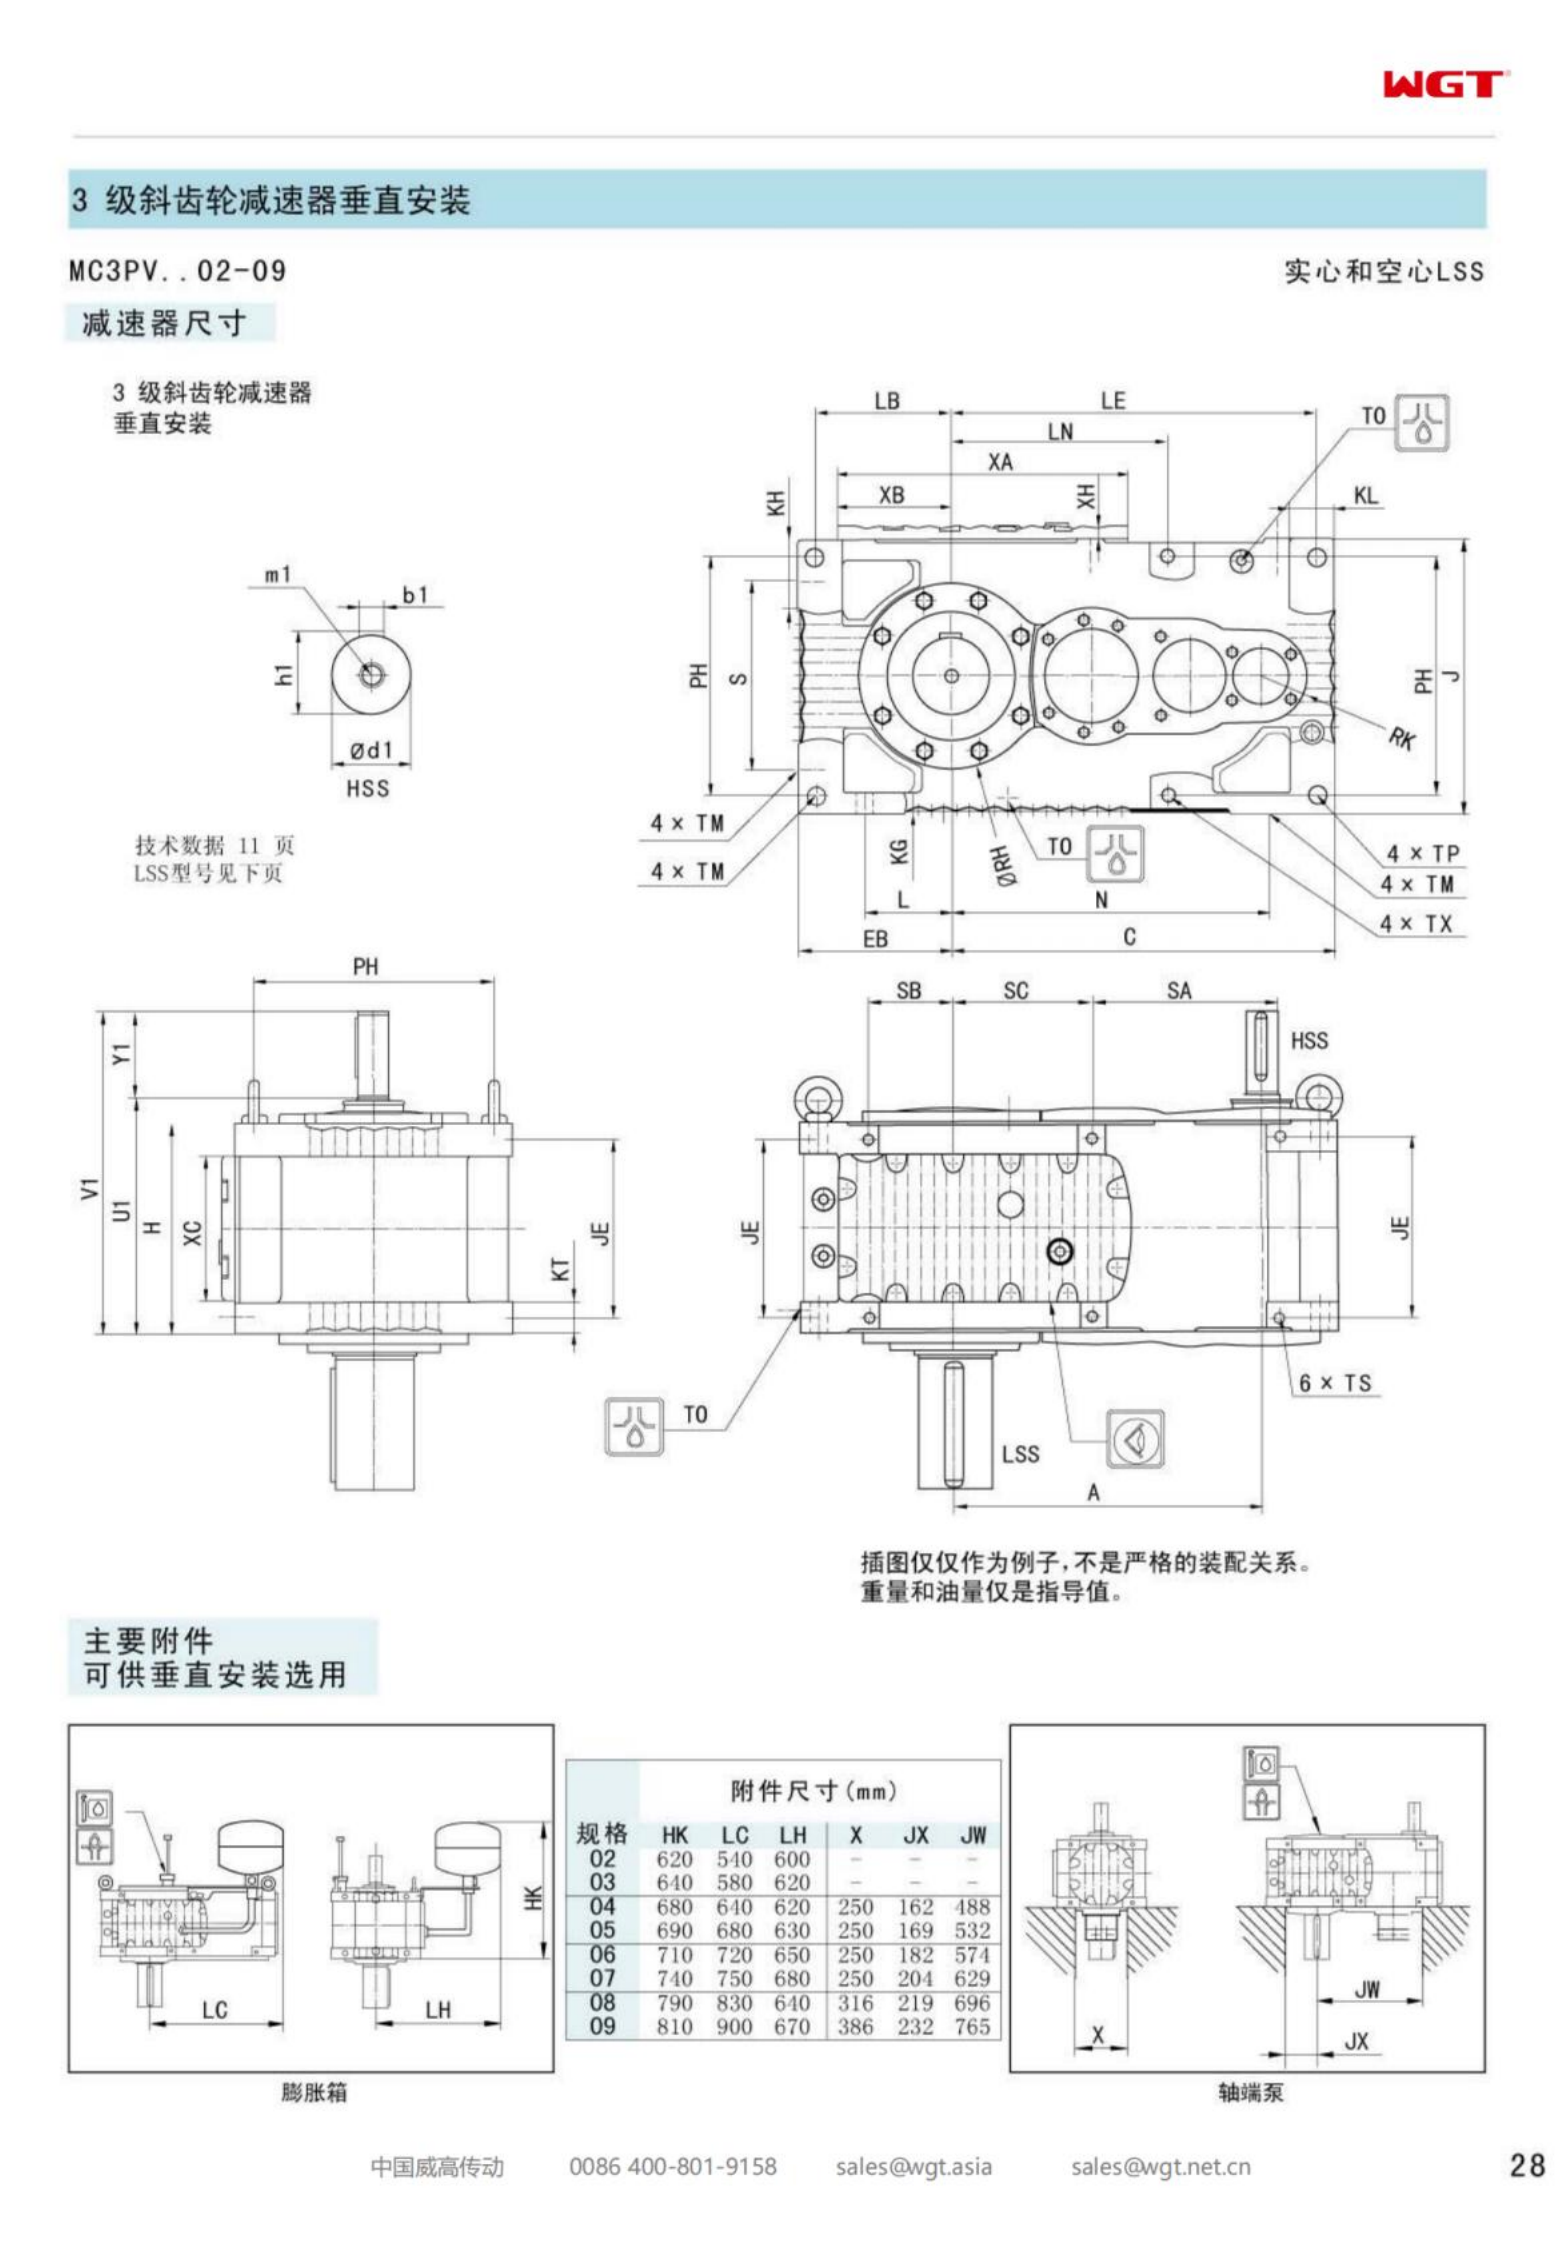 MC3PVST08 replaces _SEW_MC_Series gearbox (patent)